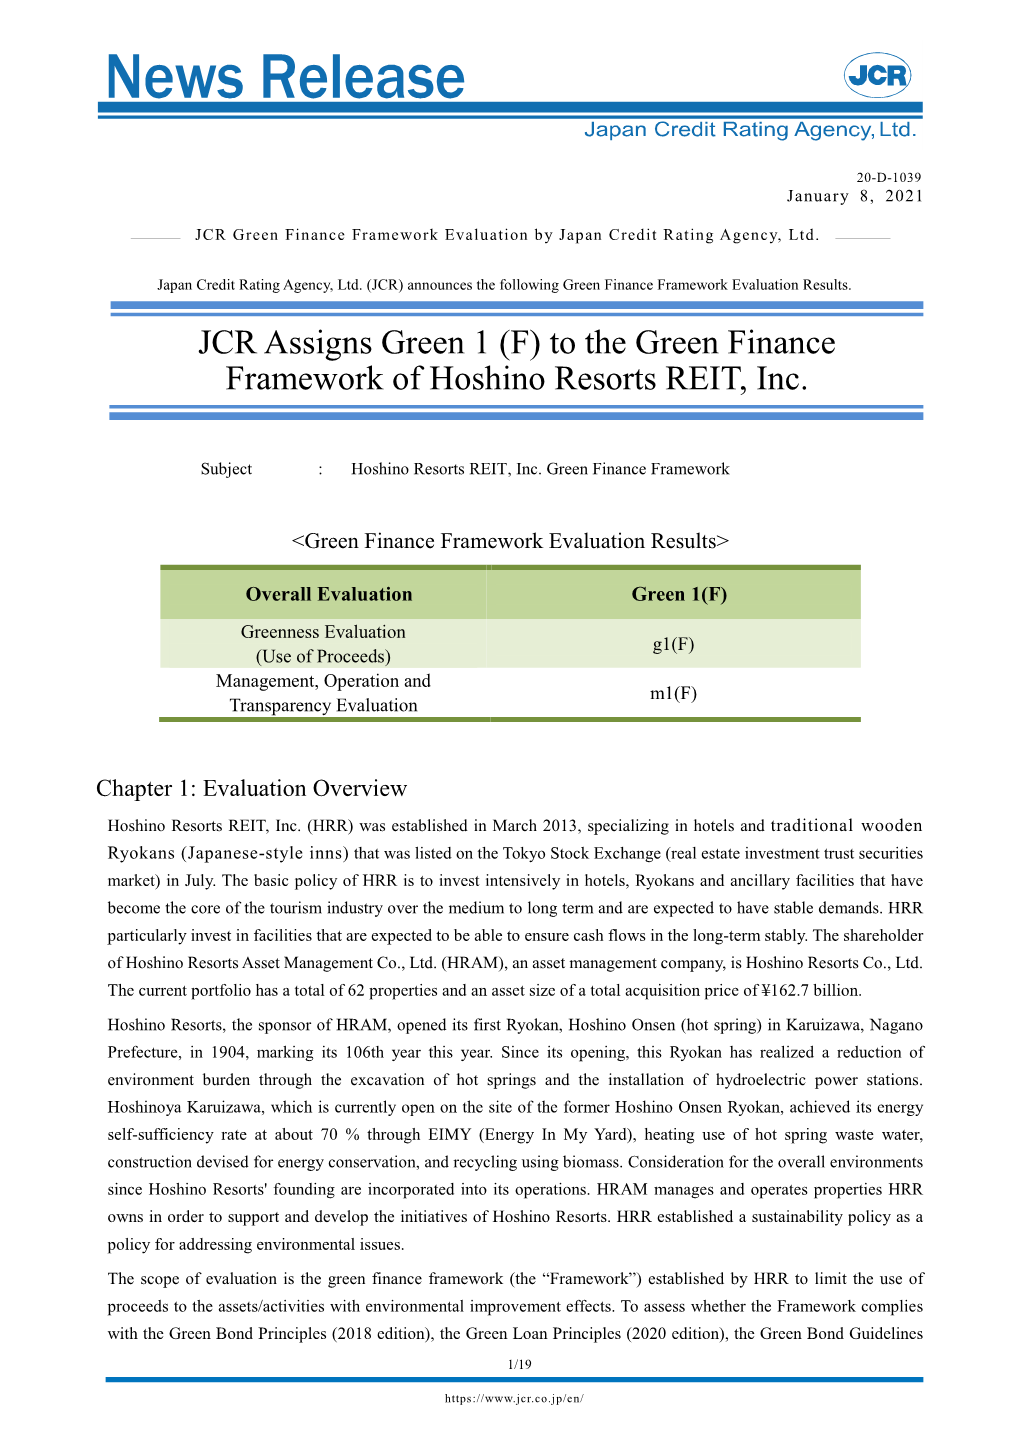 To Green Finance Framework of Hoshino Resorts REIT